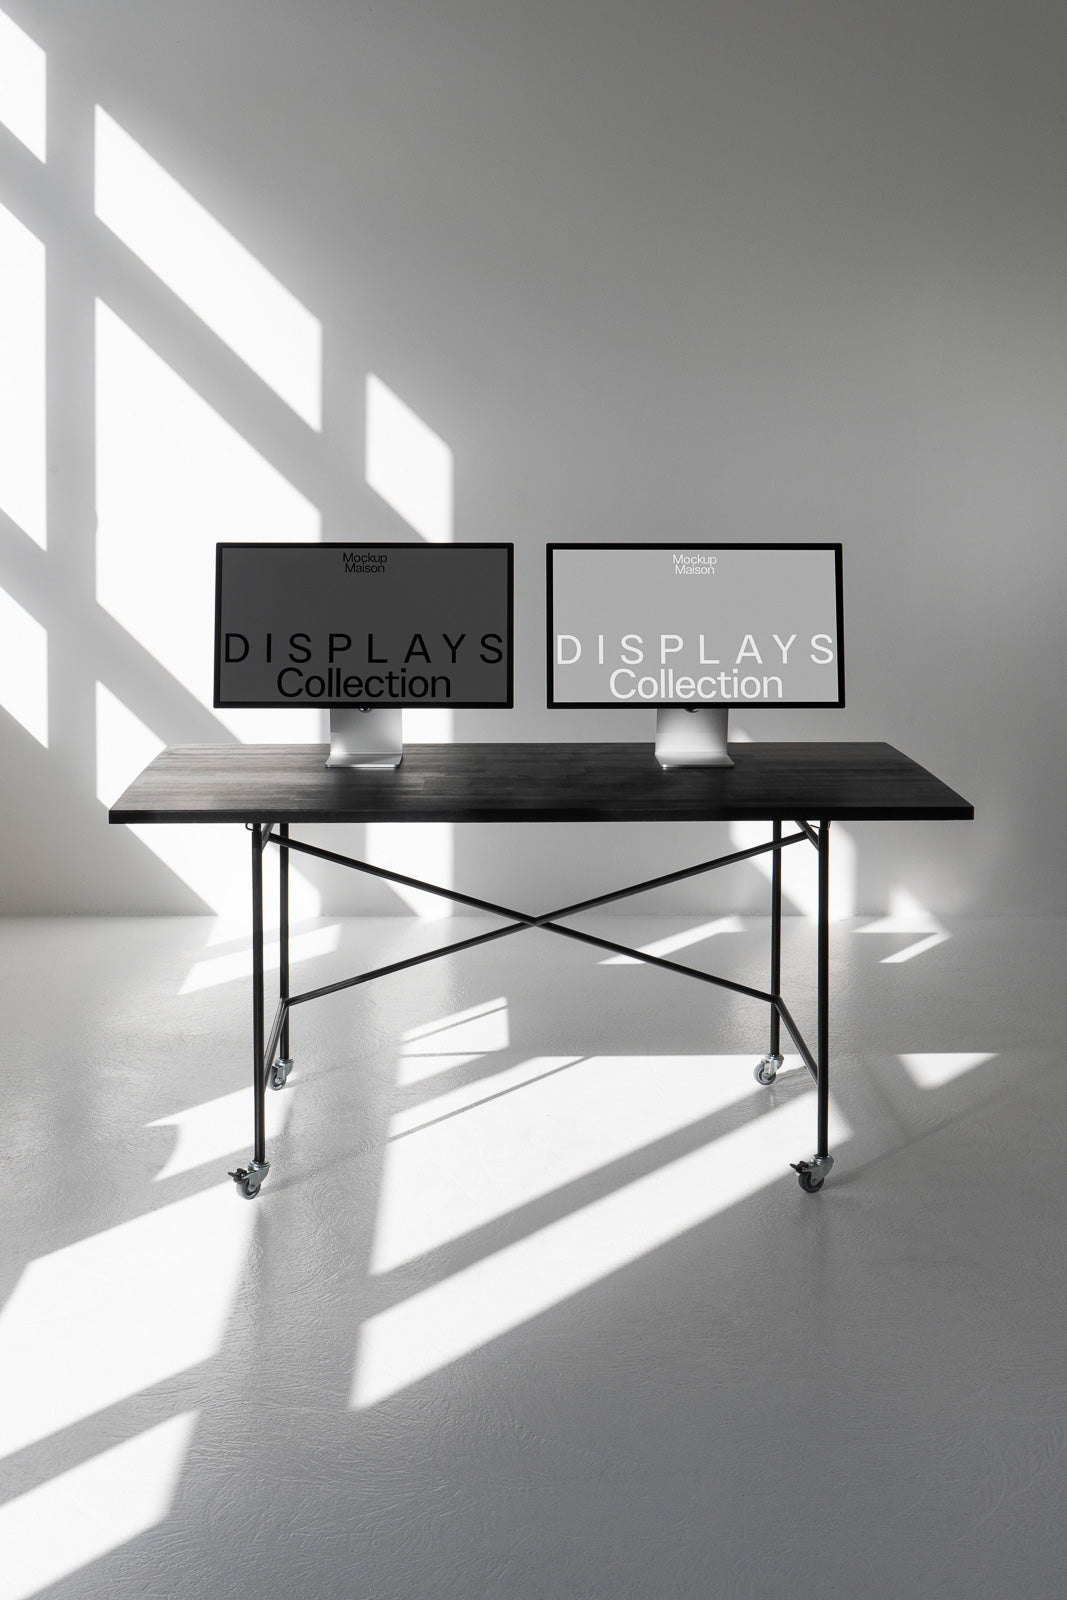 Studio Display 27" DP-DSP1-15